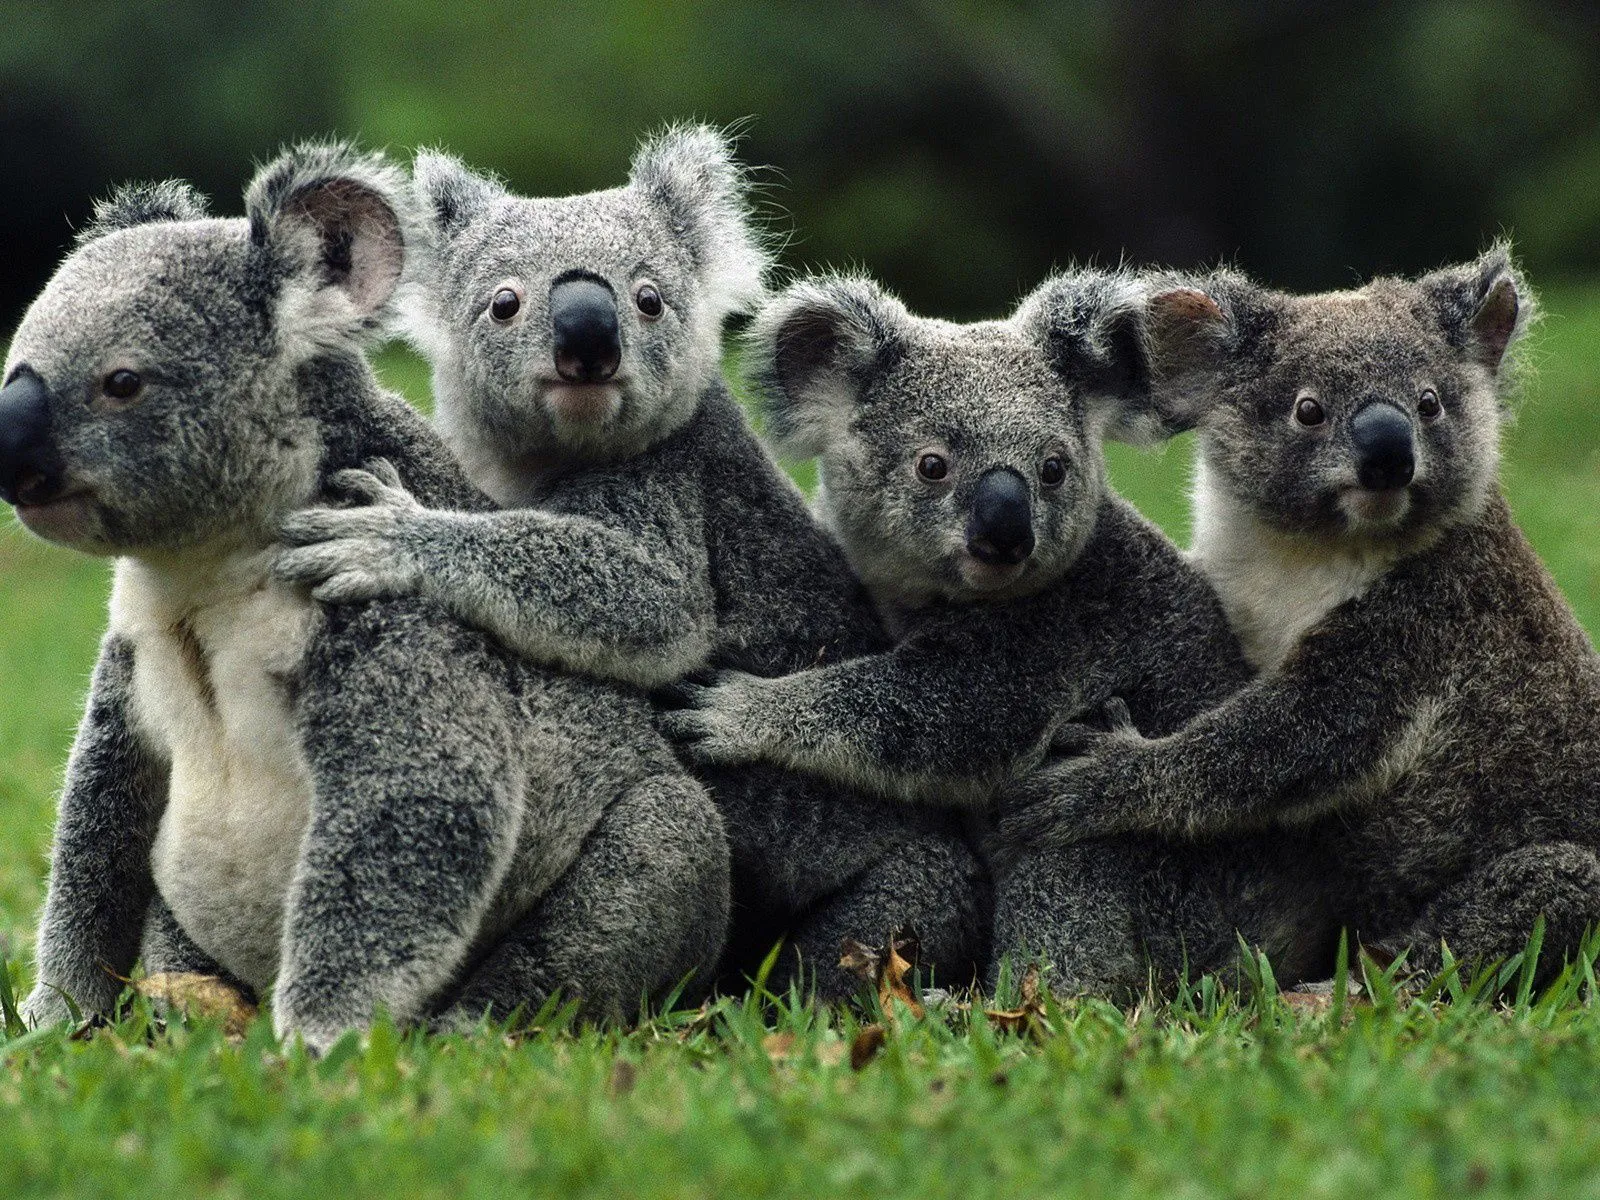 Fotos de koalas abrazandose ~ Mejores Fotos del Mundo ...